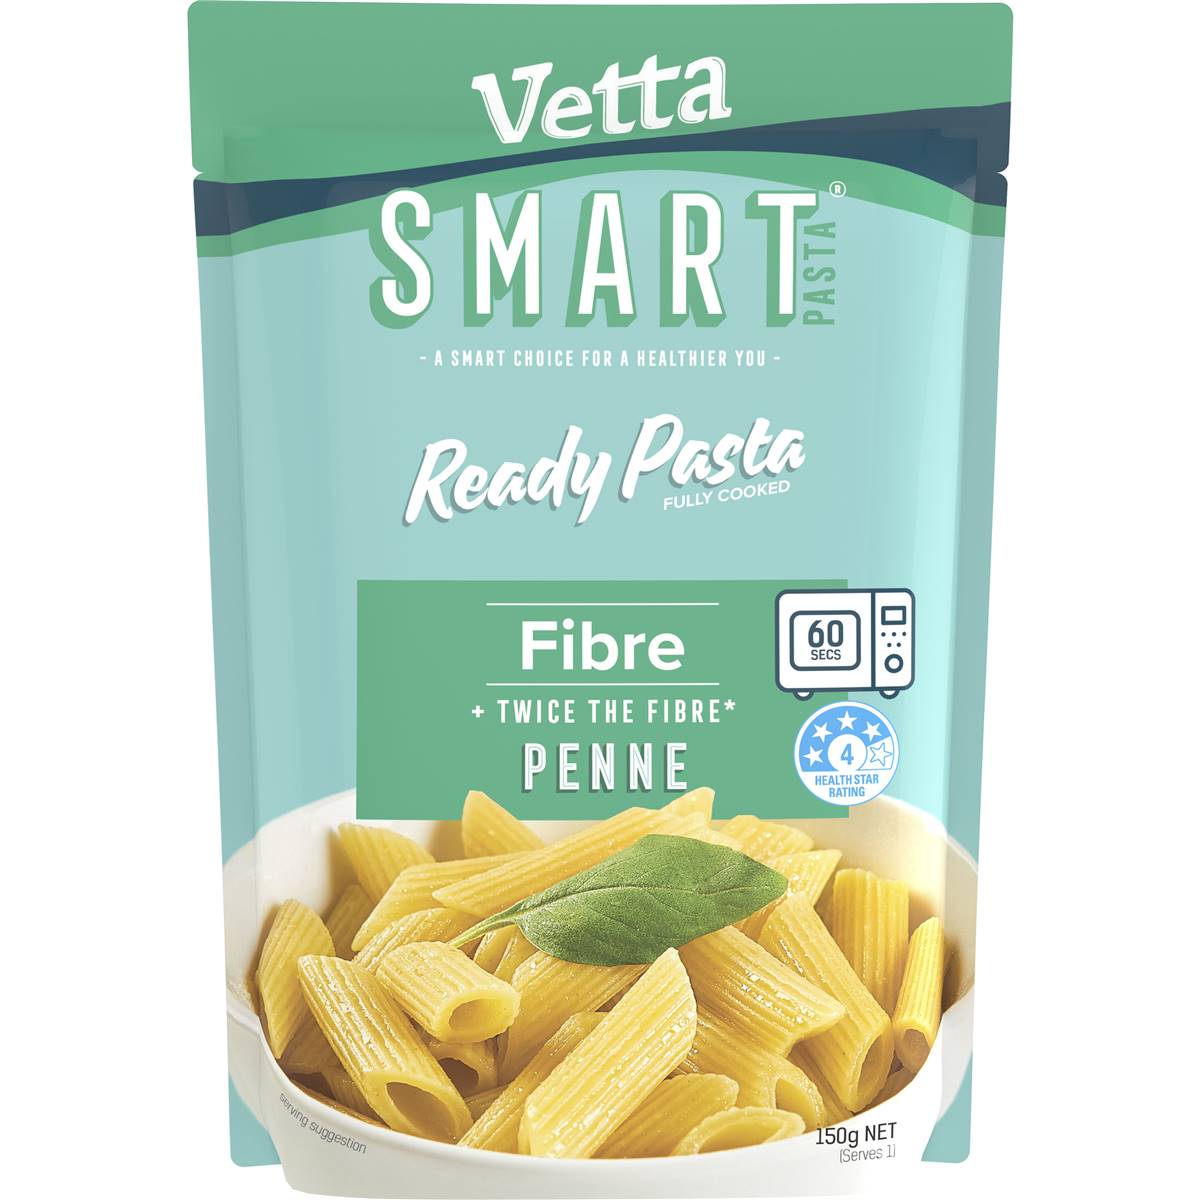 Calories in Vetta Microwave Ready Pasta Fibre Penne